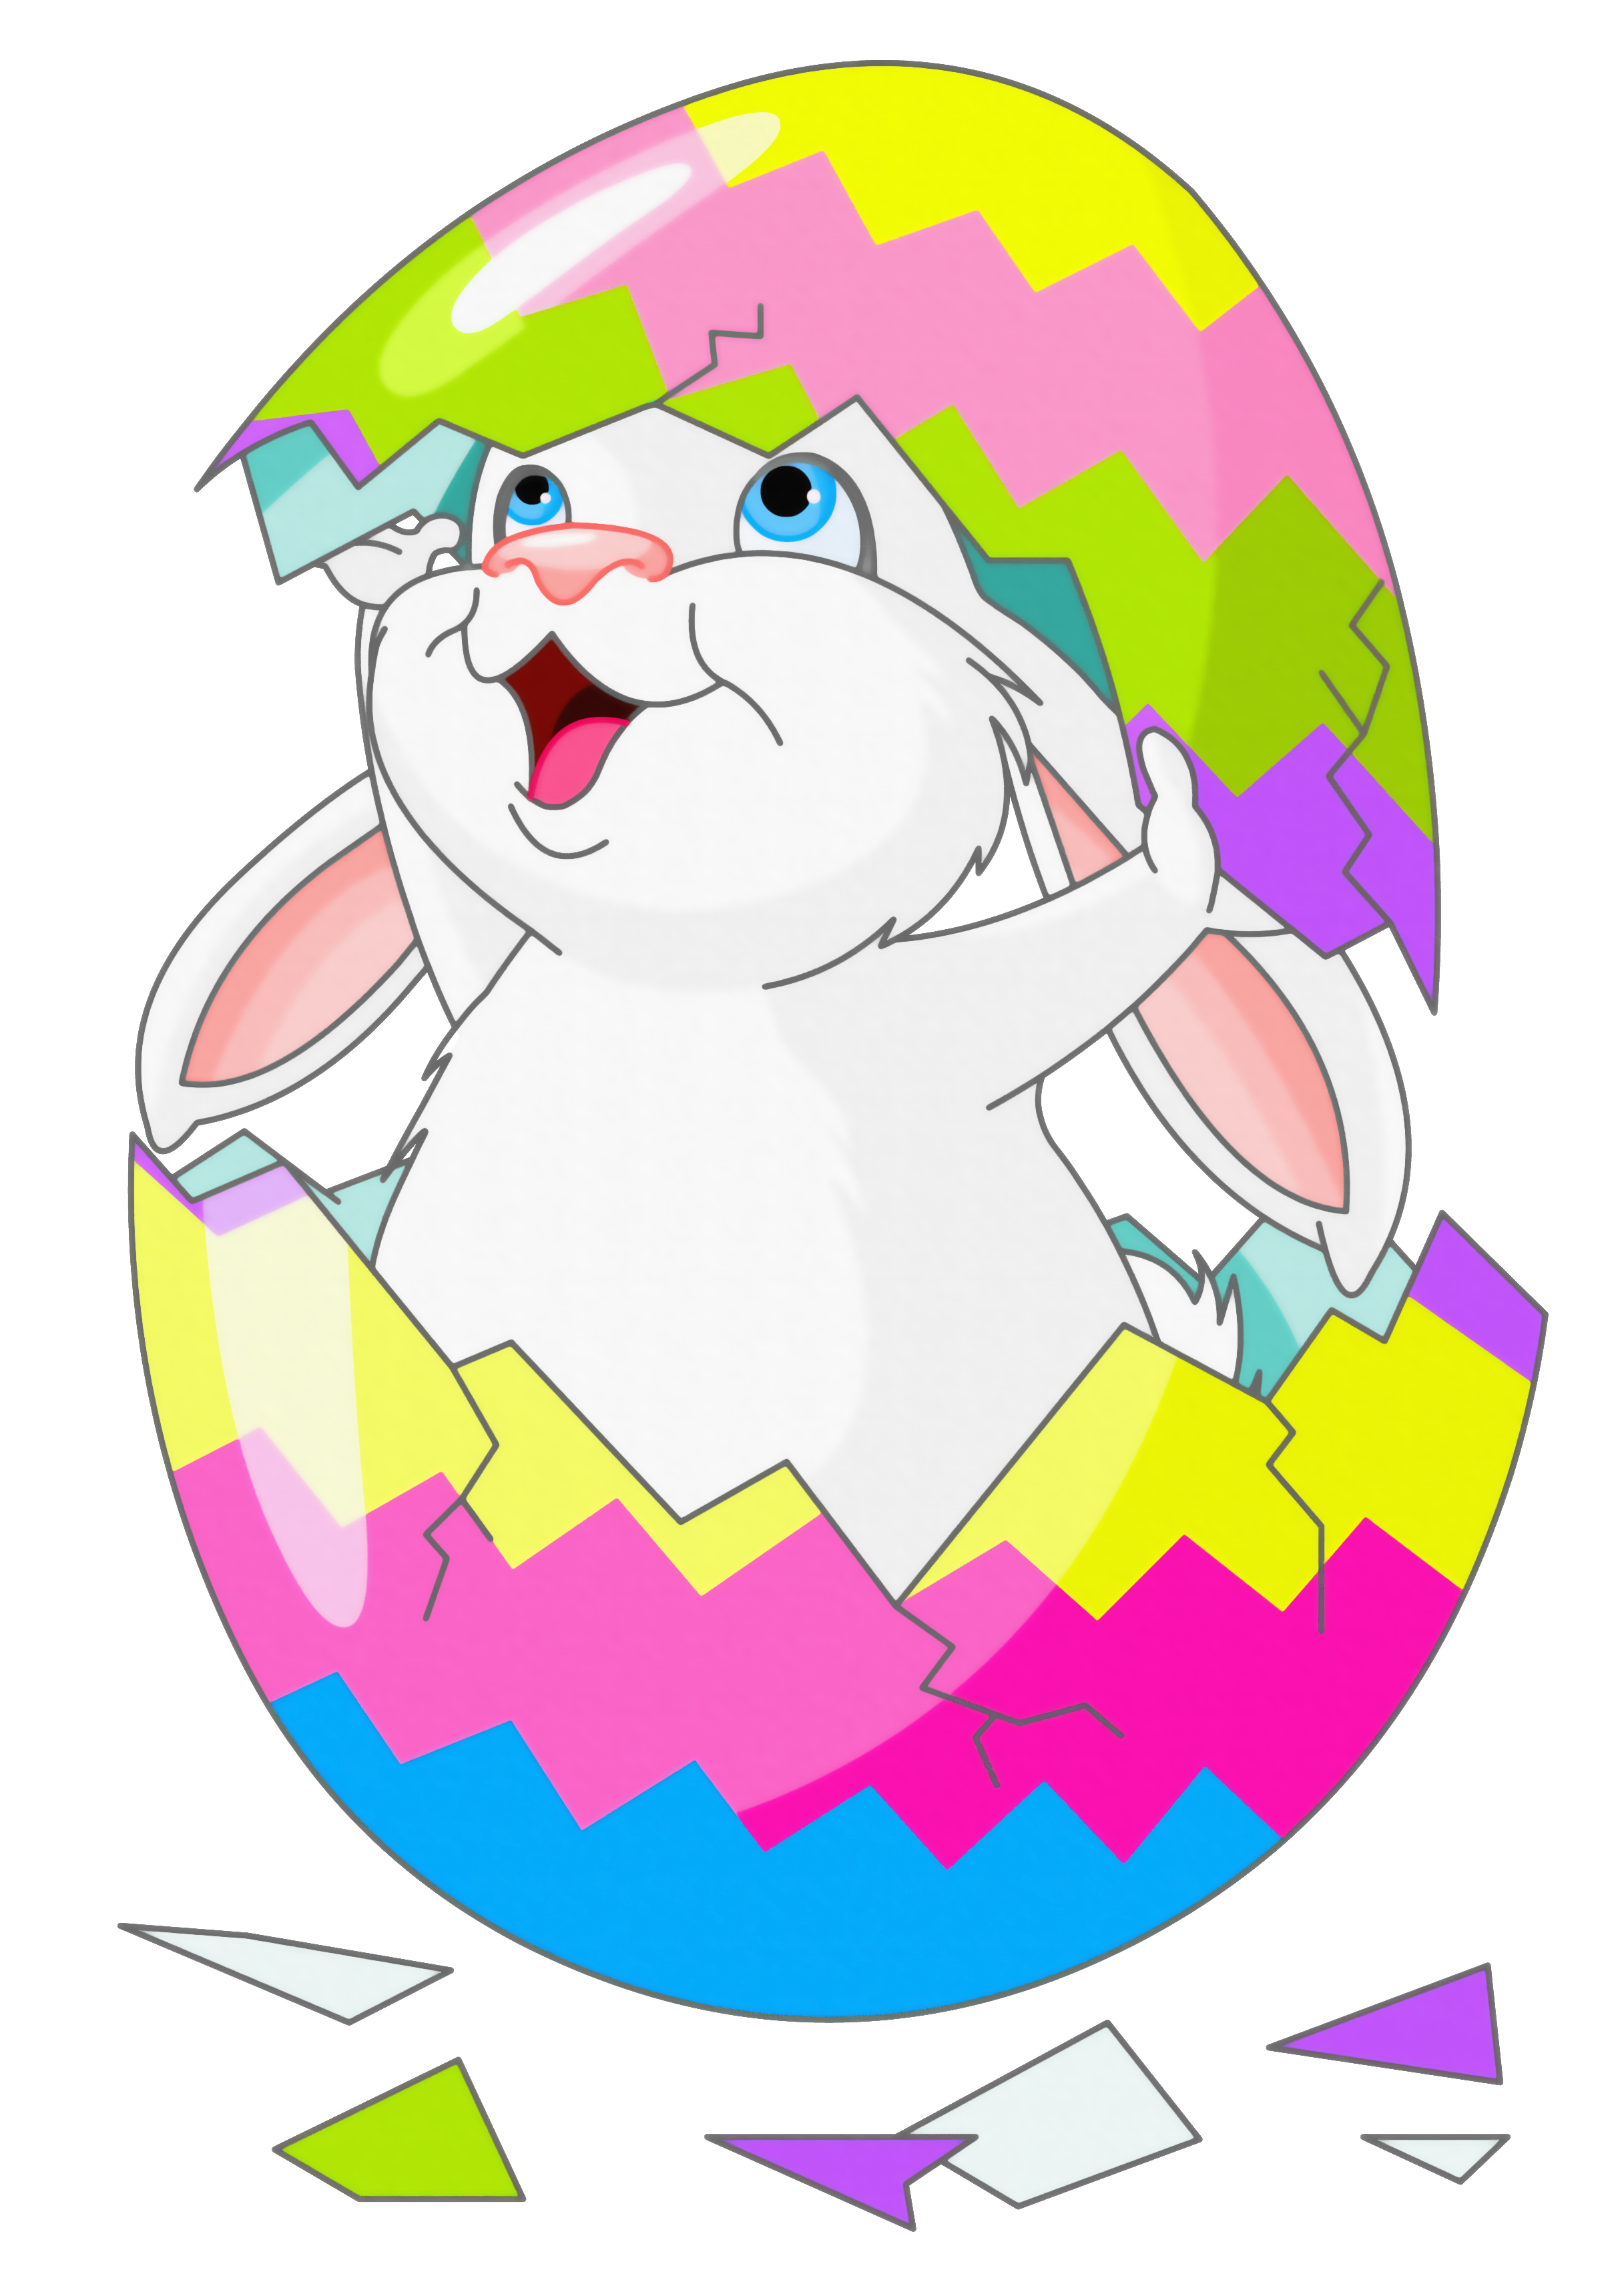 Easter Bunny Clip Art - ClipArt Best